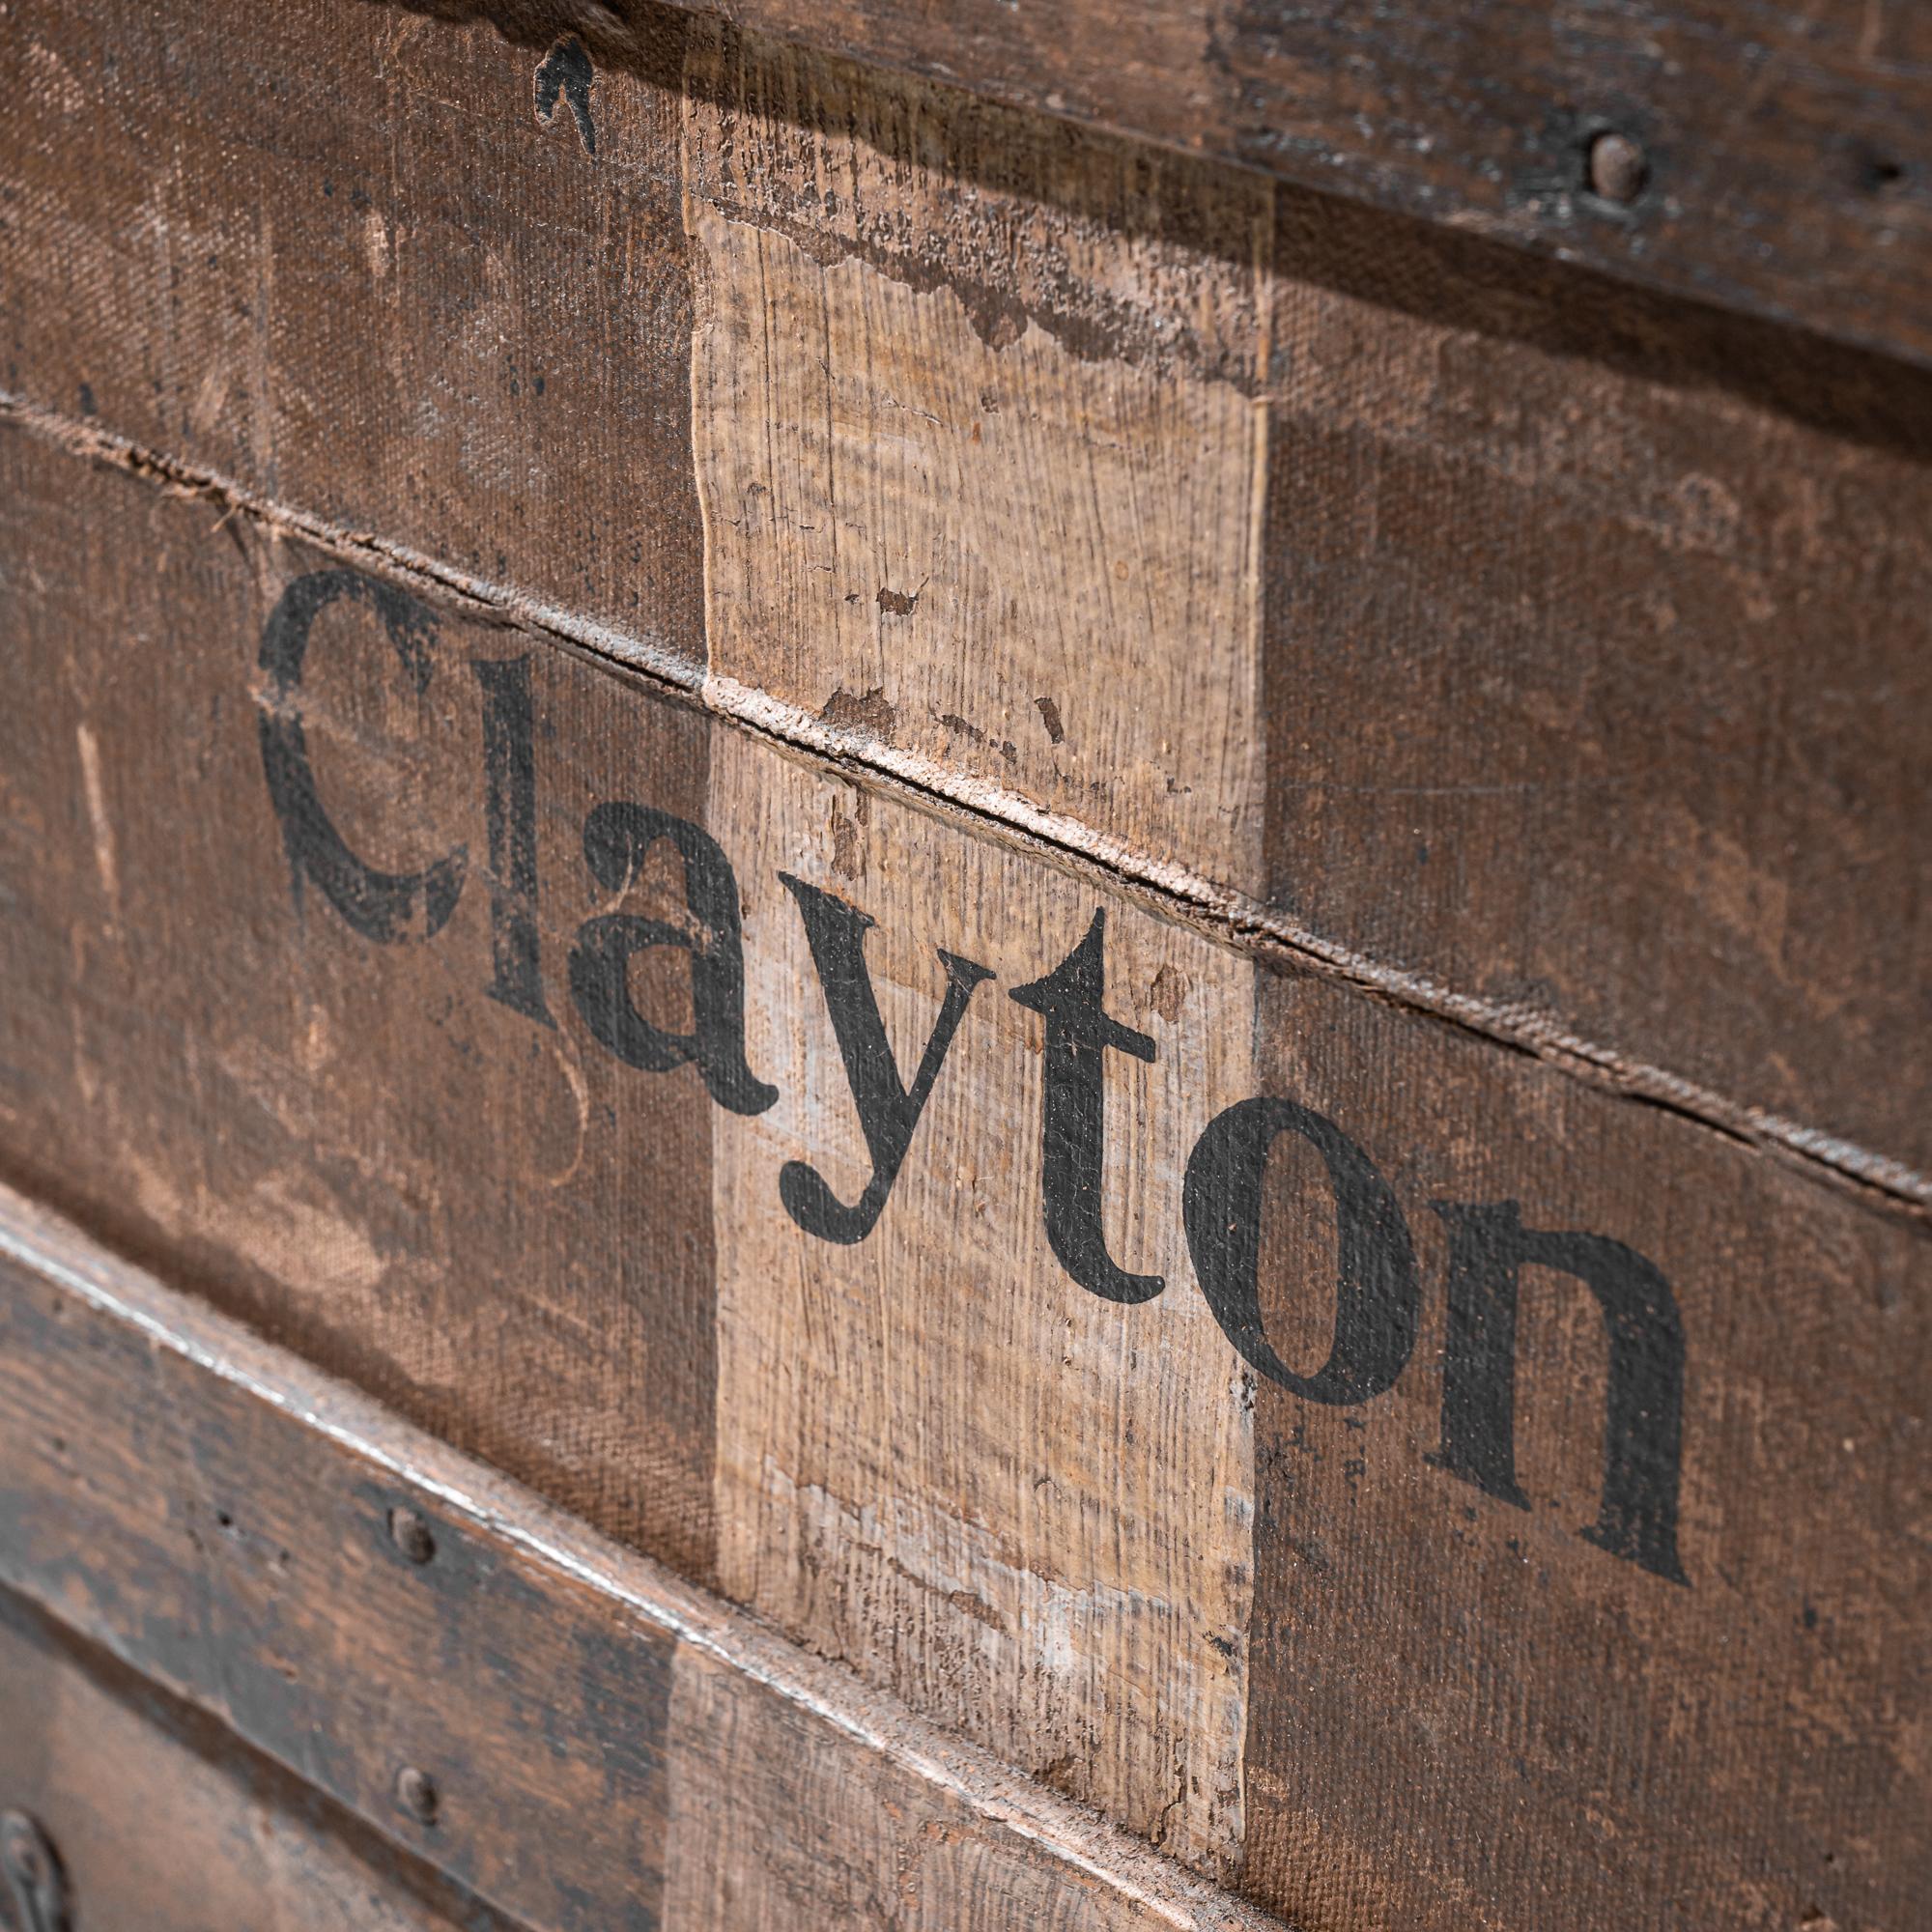 Antique British Wooden Trunk “Clayton” For Sale 2